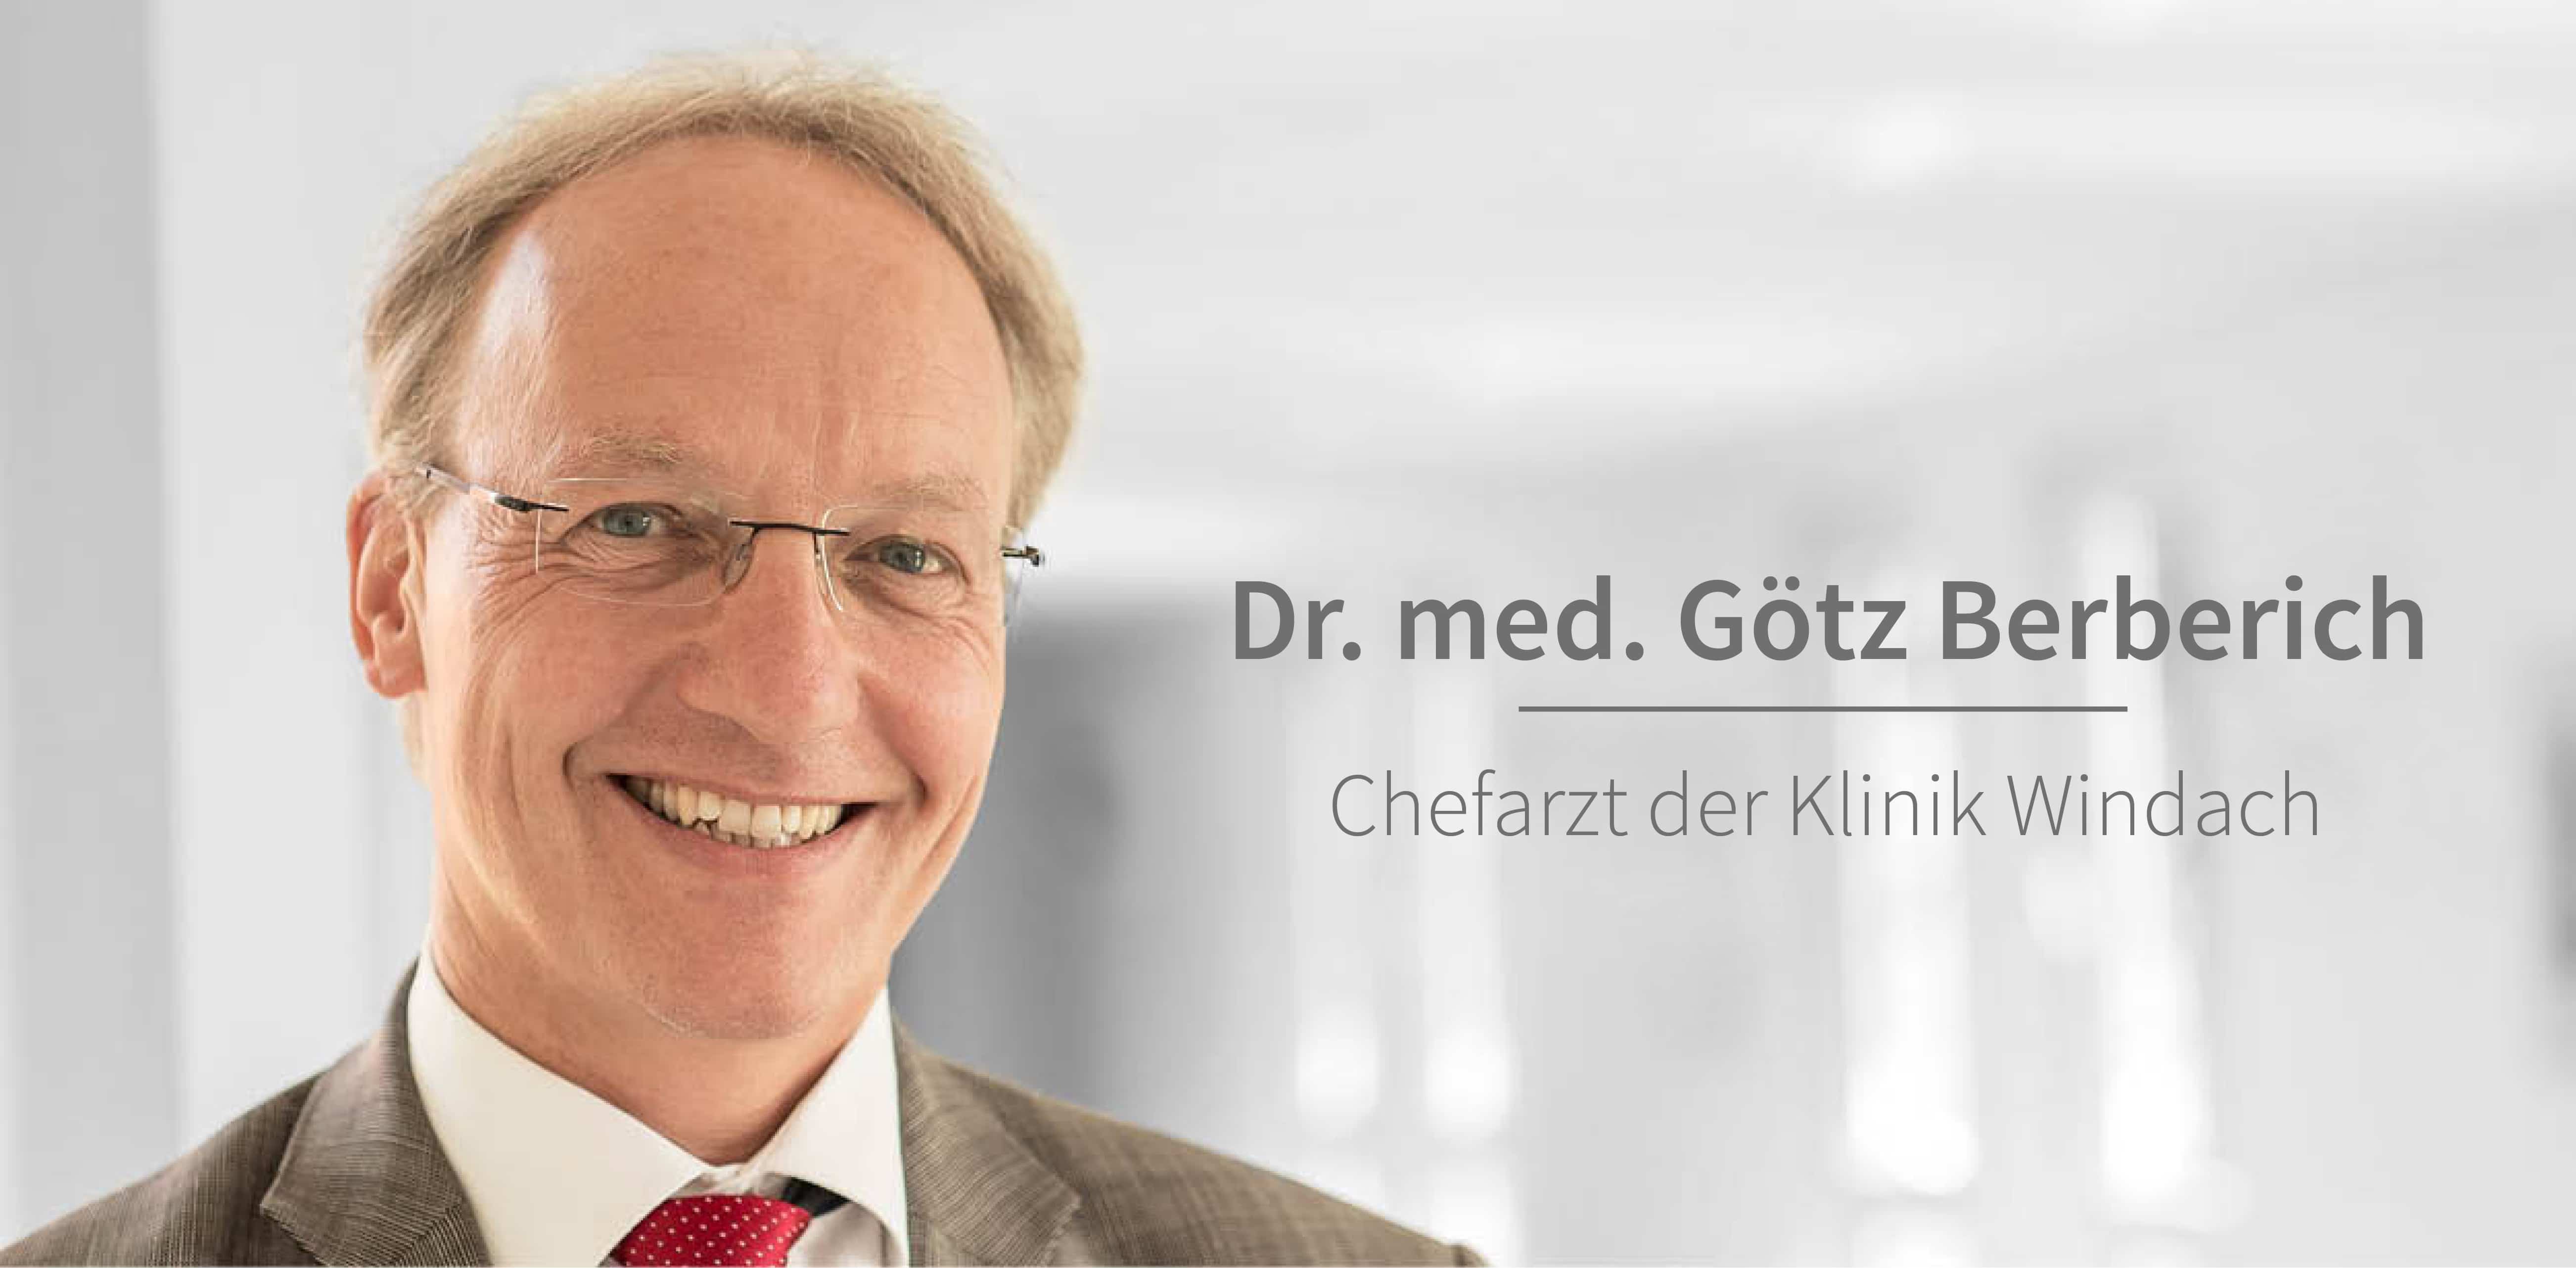 klinik-windach-goetz-berberich-portrait-chefarzt